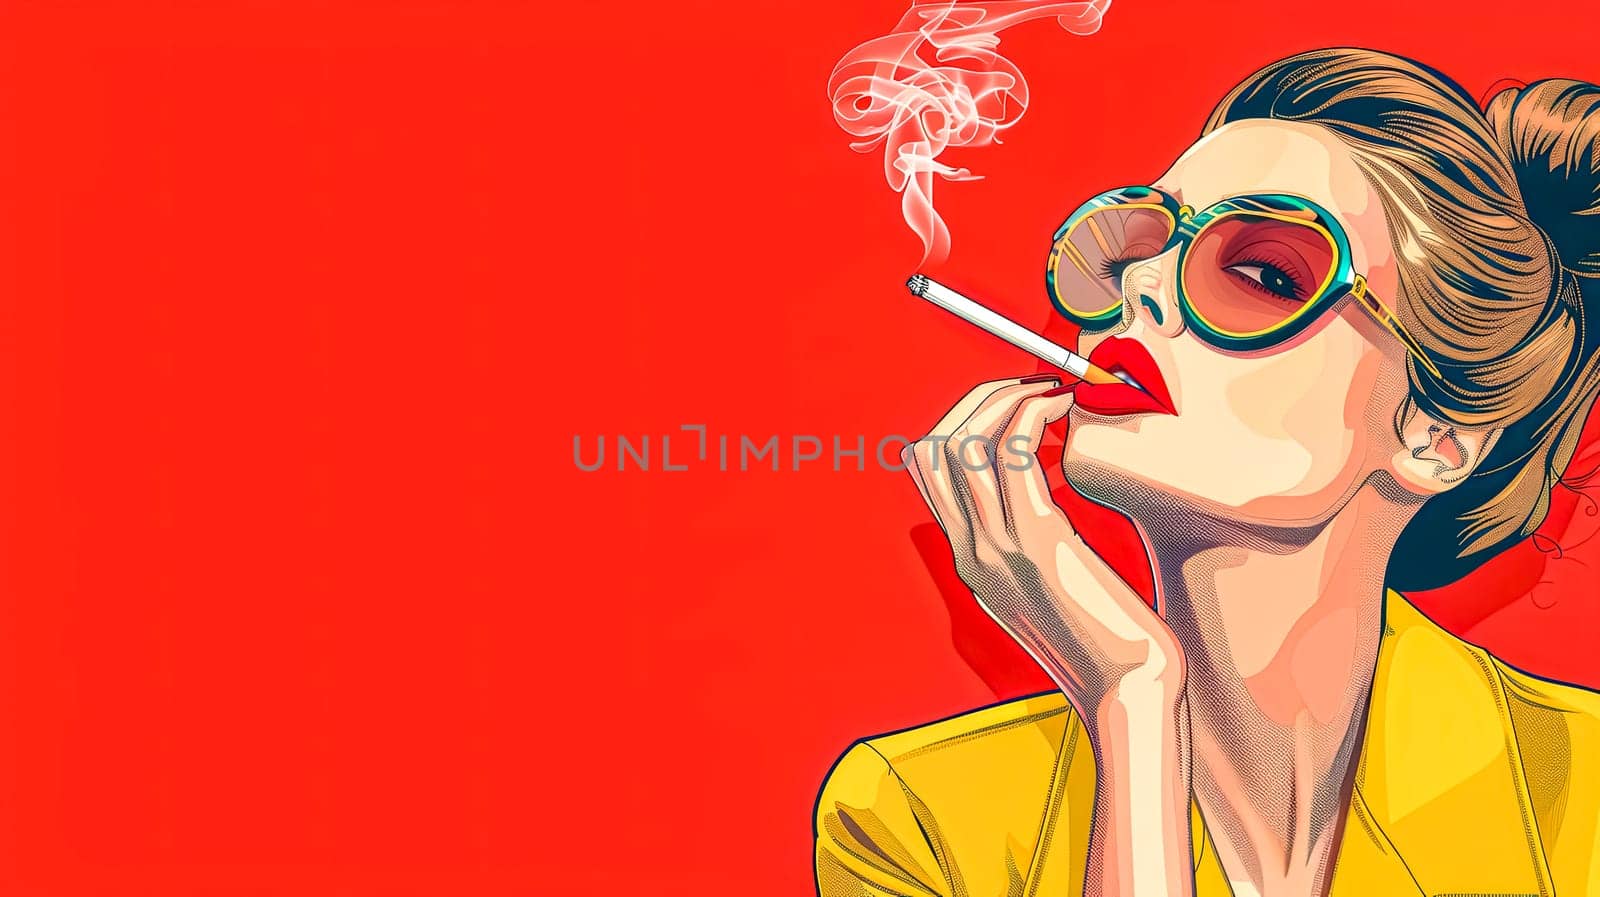 Retro Fashion Woman Smoking Against Red Background by Edophoto